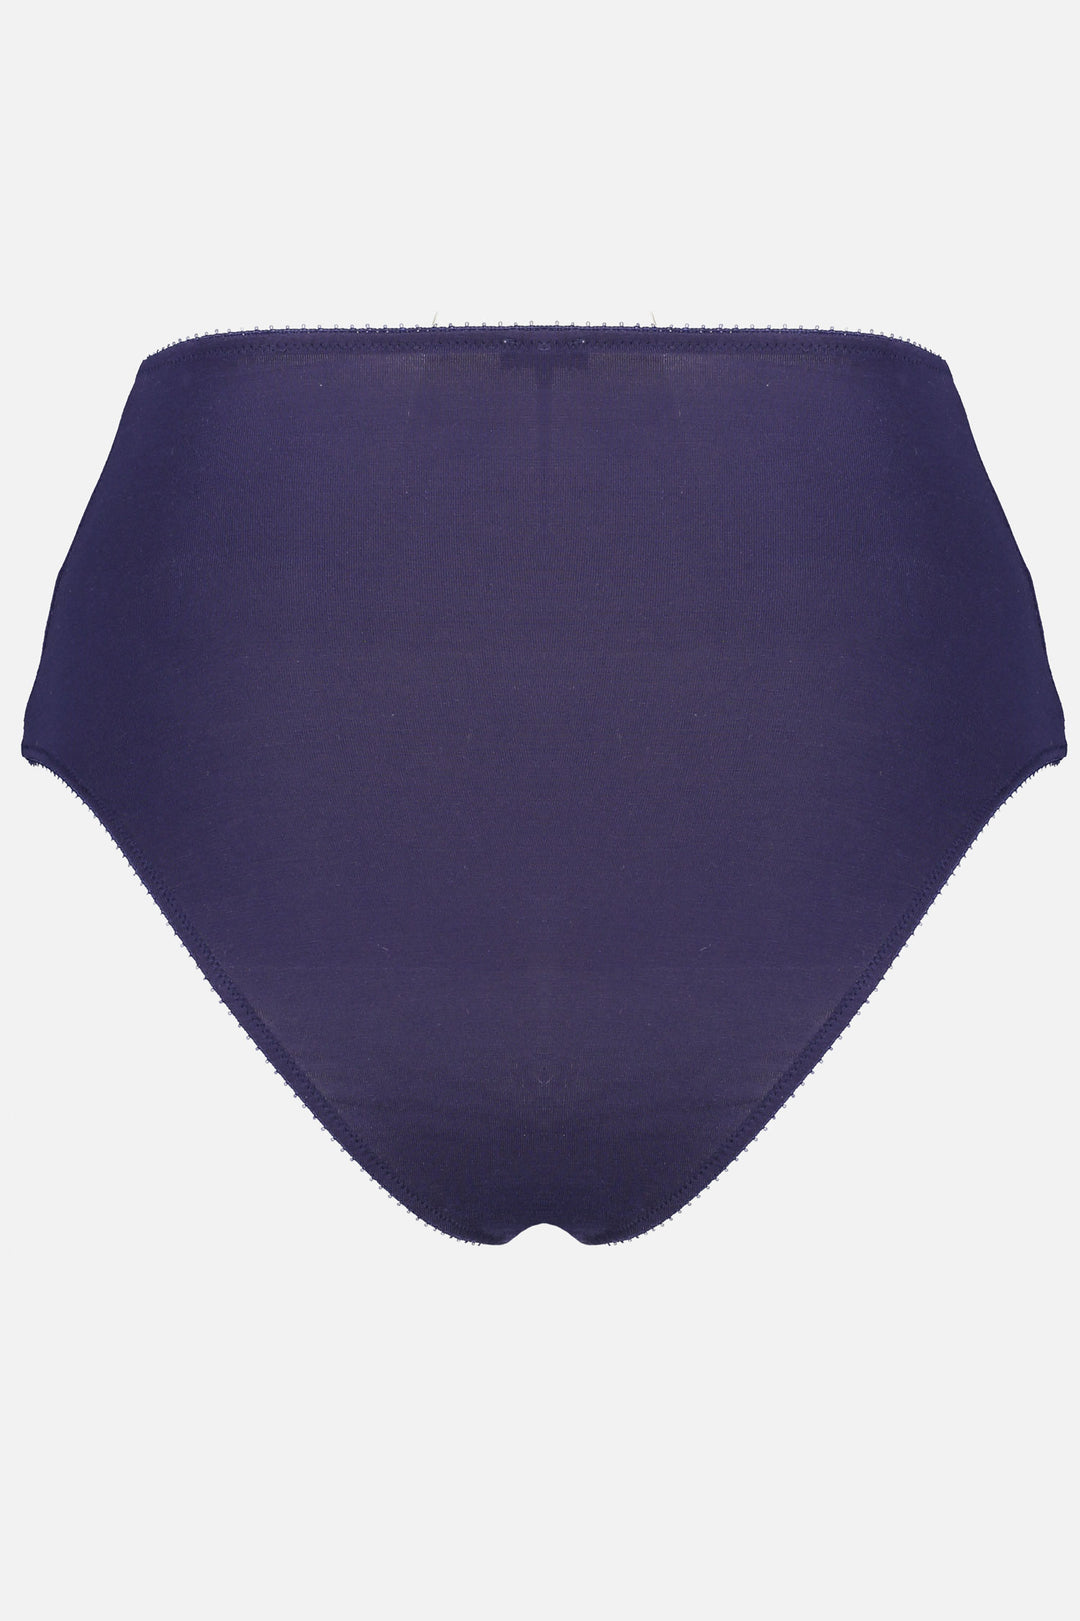 Videris Lingerie high waist knicker in indigo TENCEL™  with a flattering legline and soft elastics